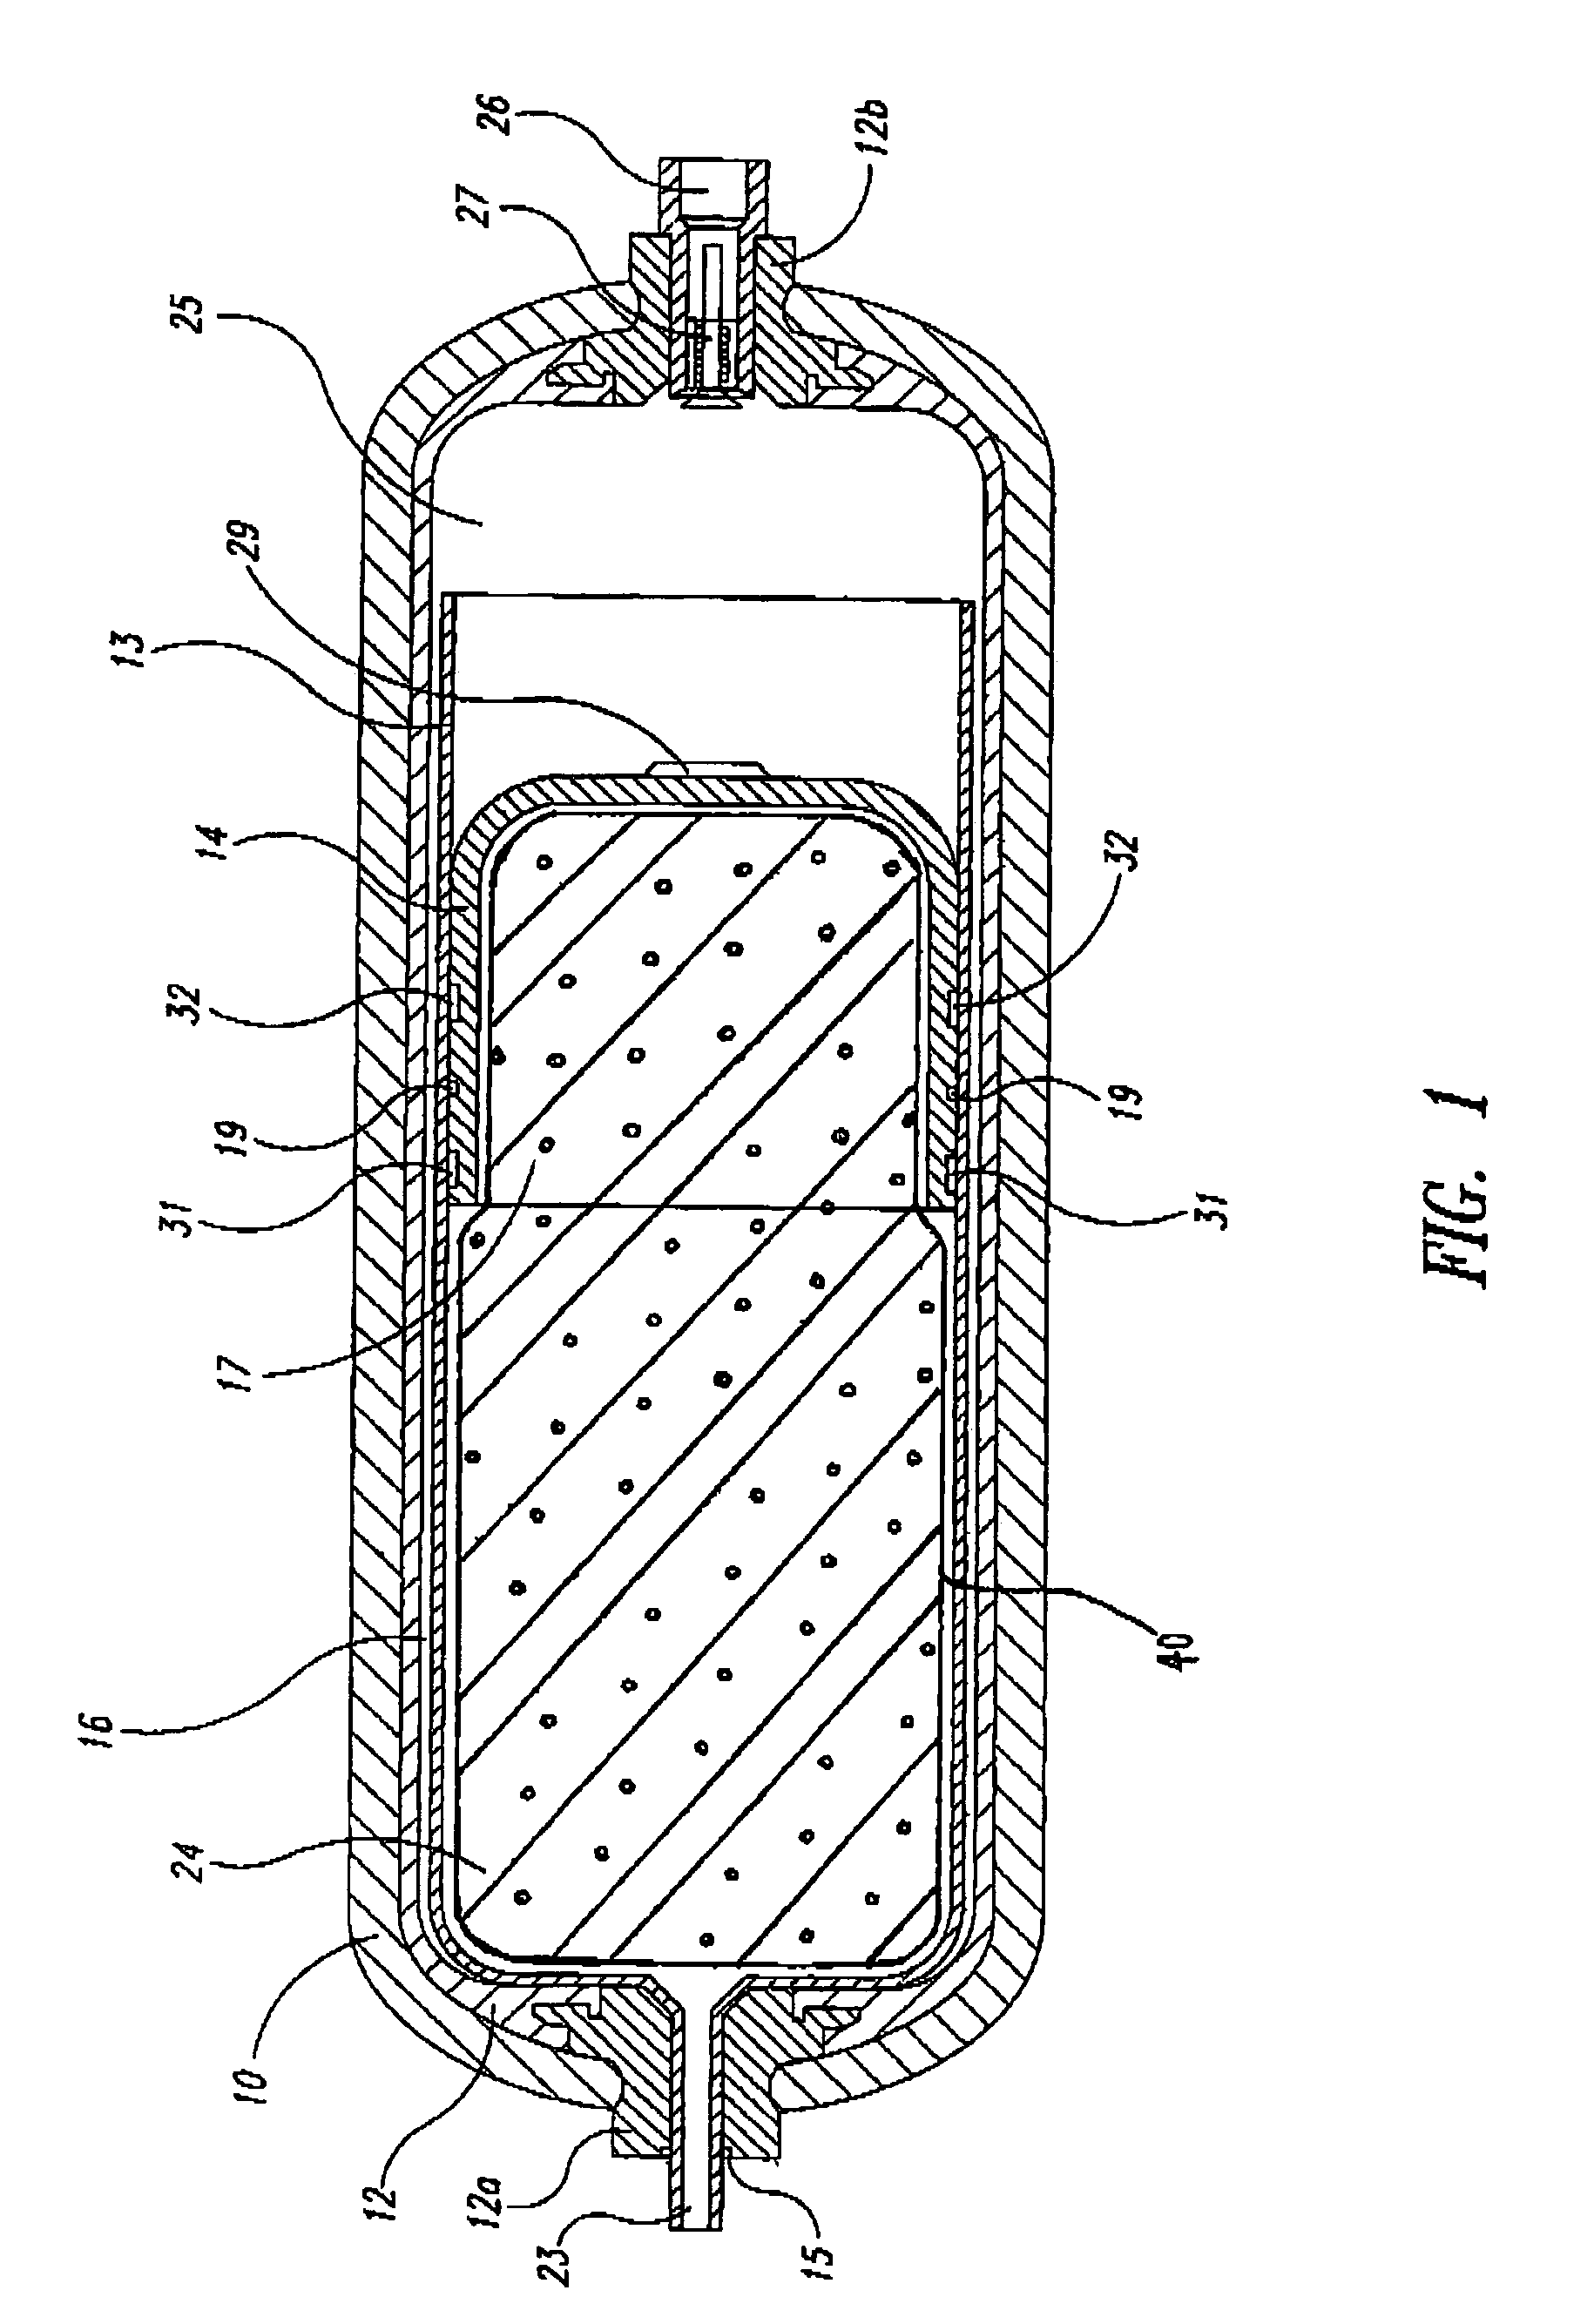 Lightweight low permeation piston-in-sleeve accumulator